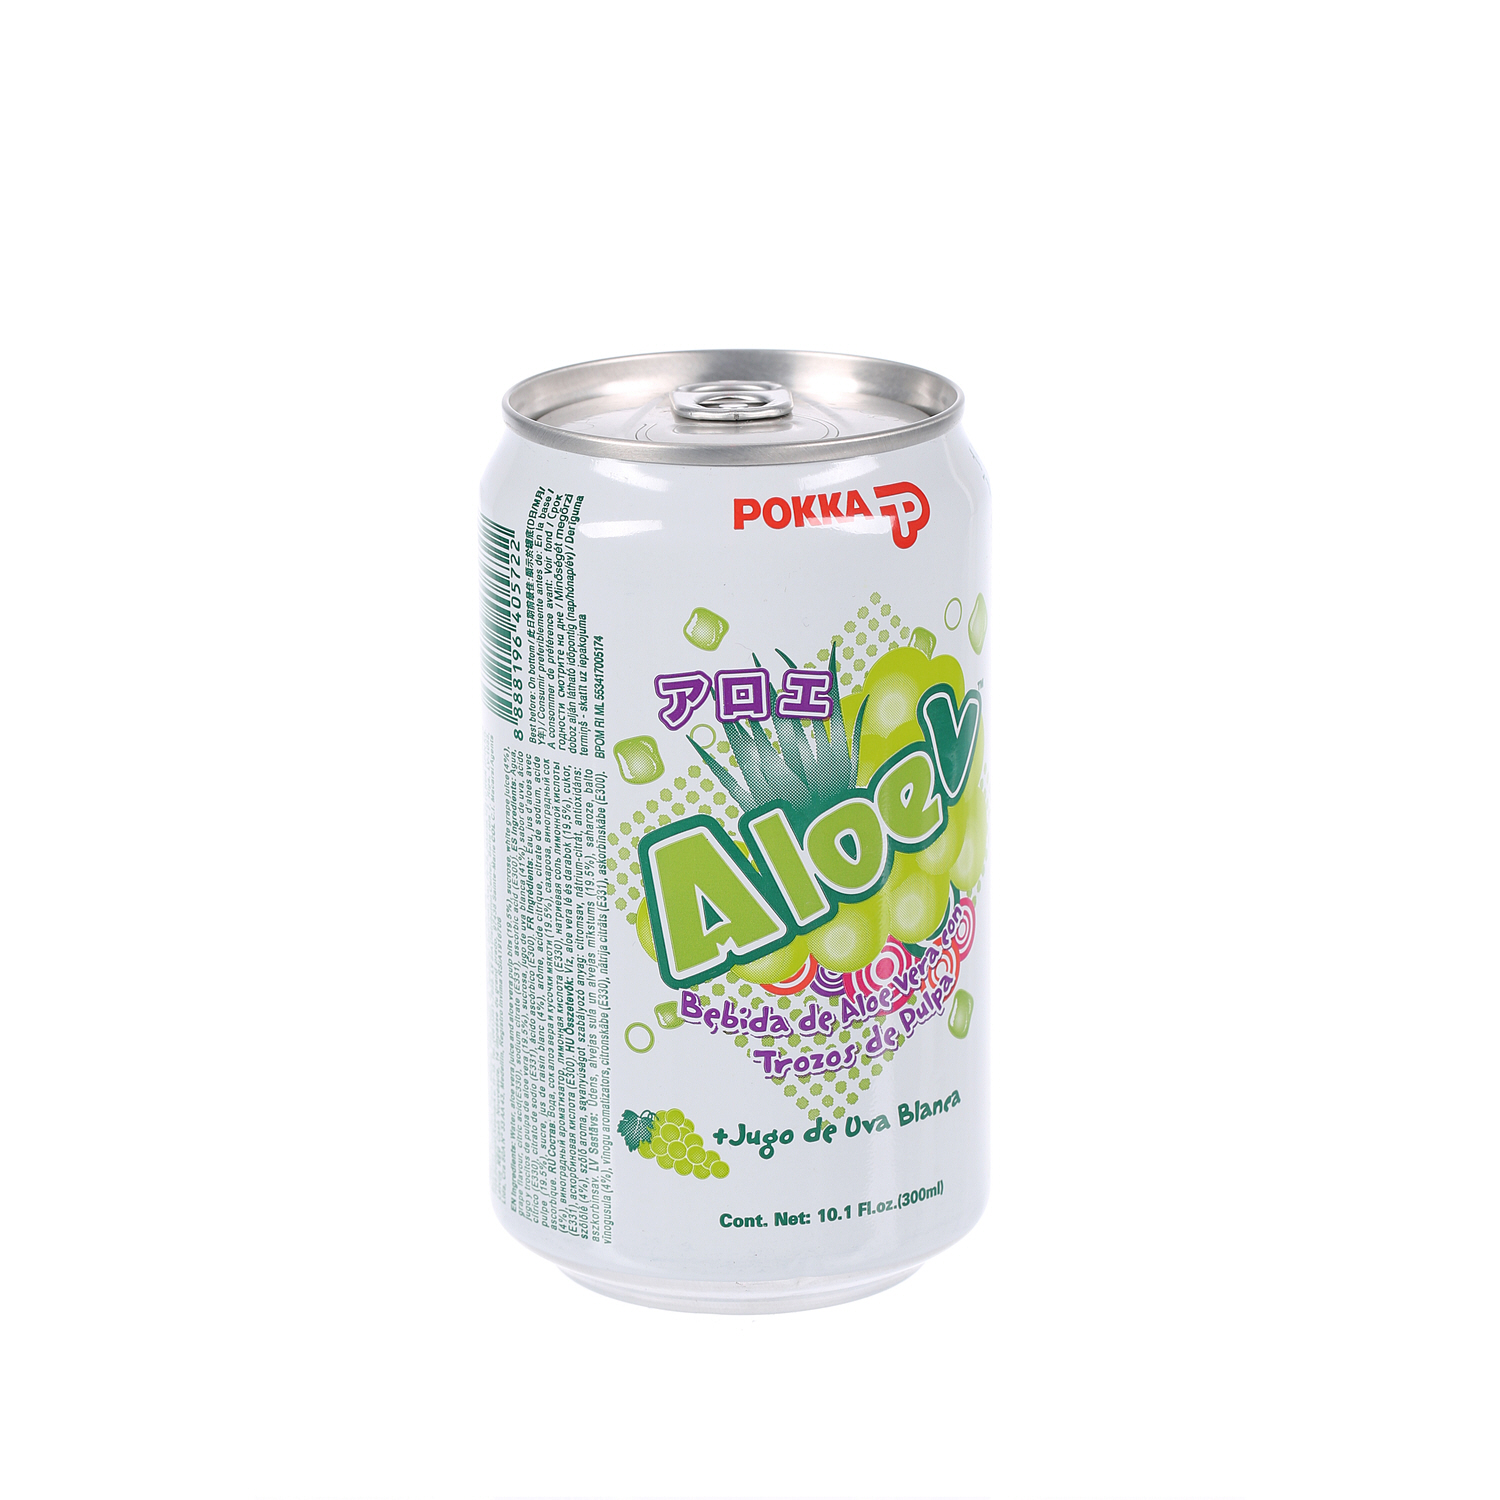 Pokka Aloevera Grape Juice 300 ml